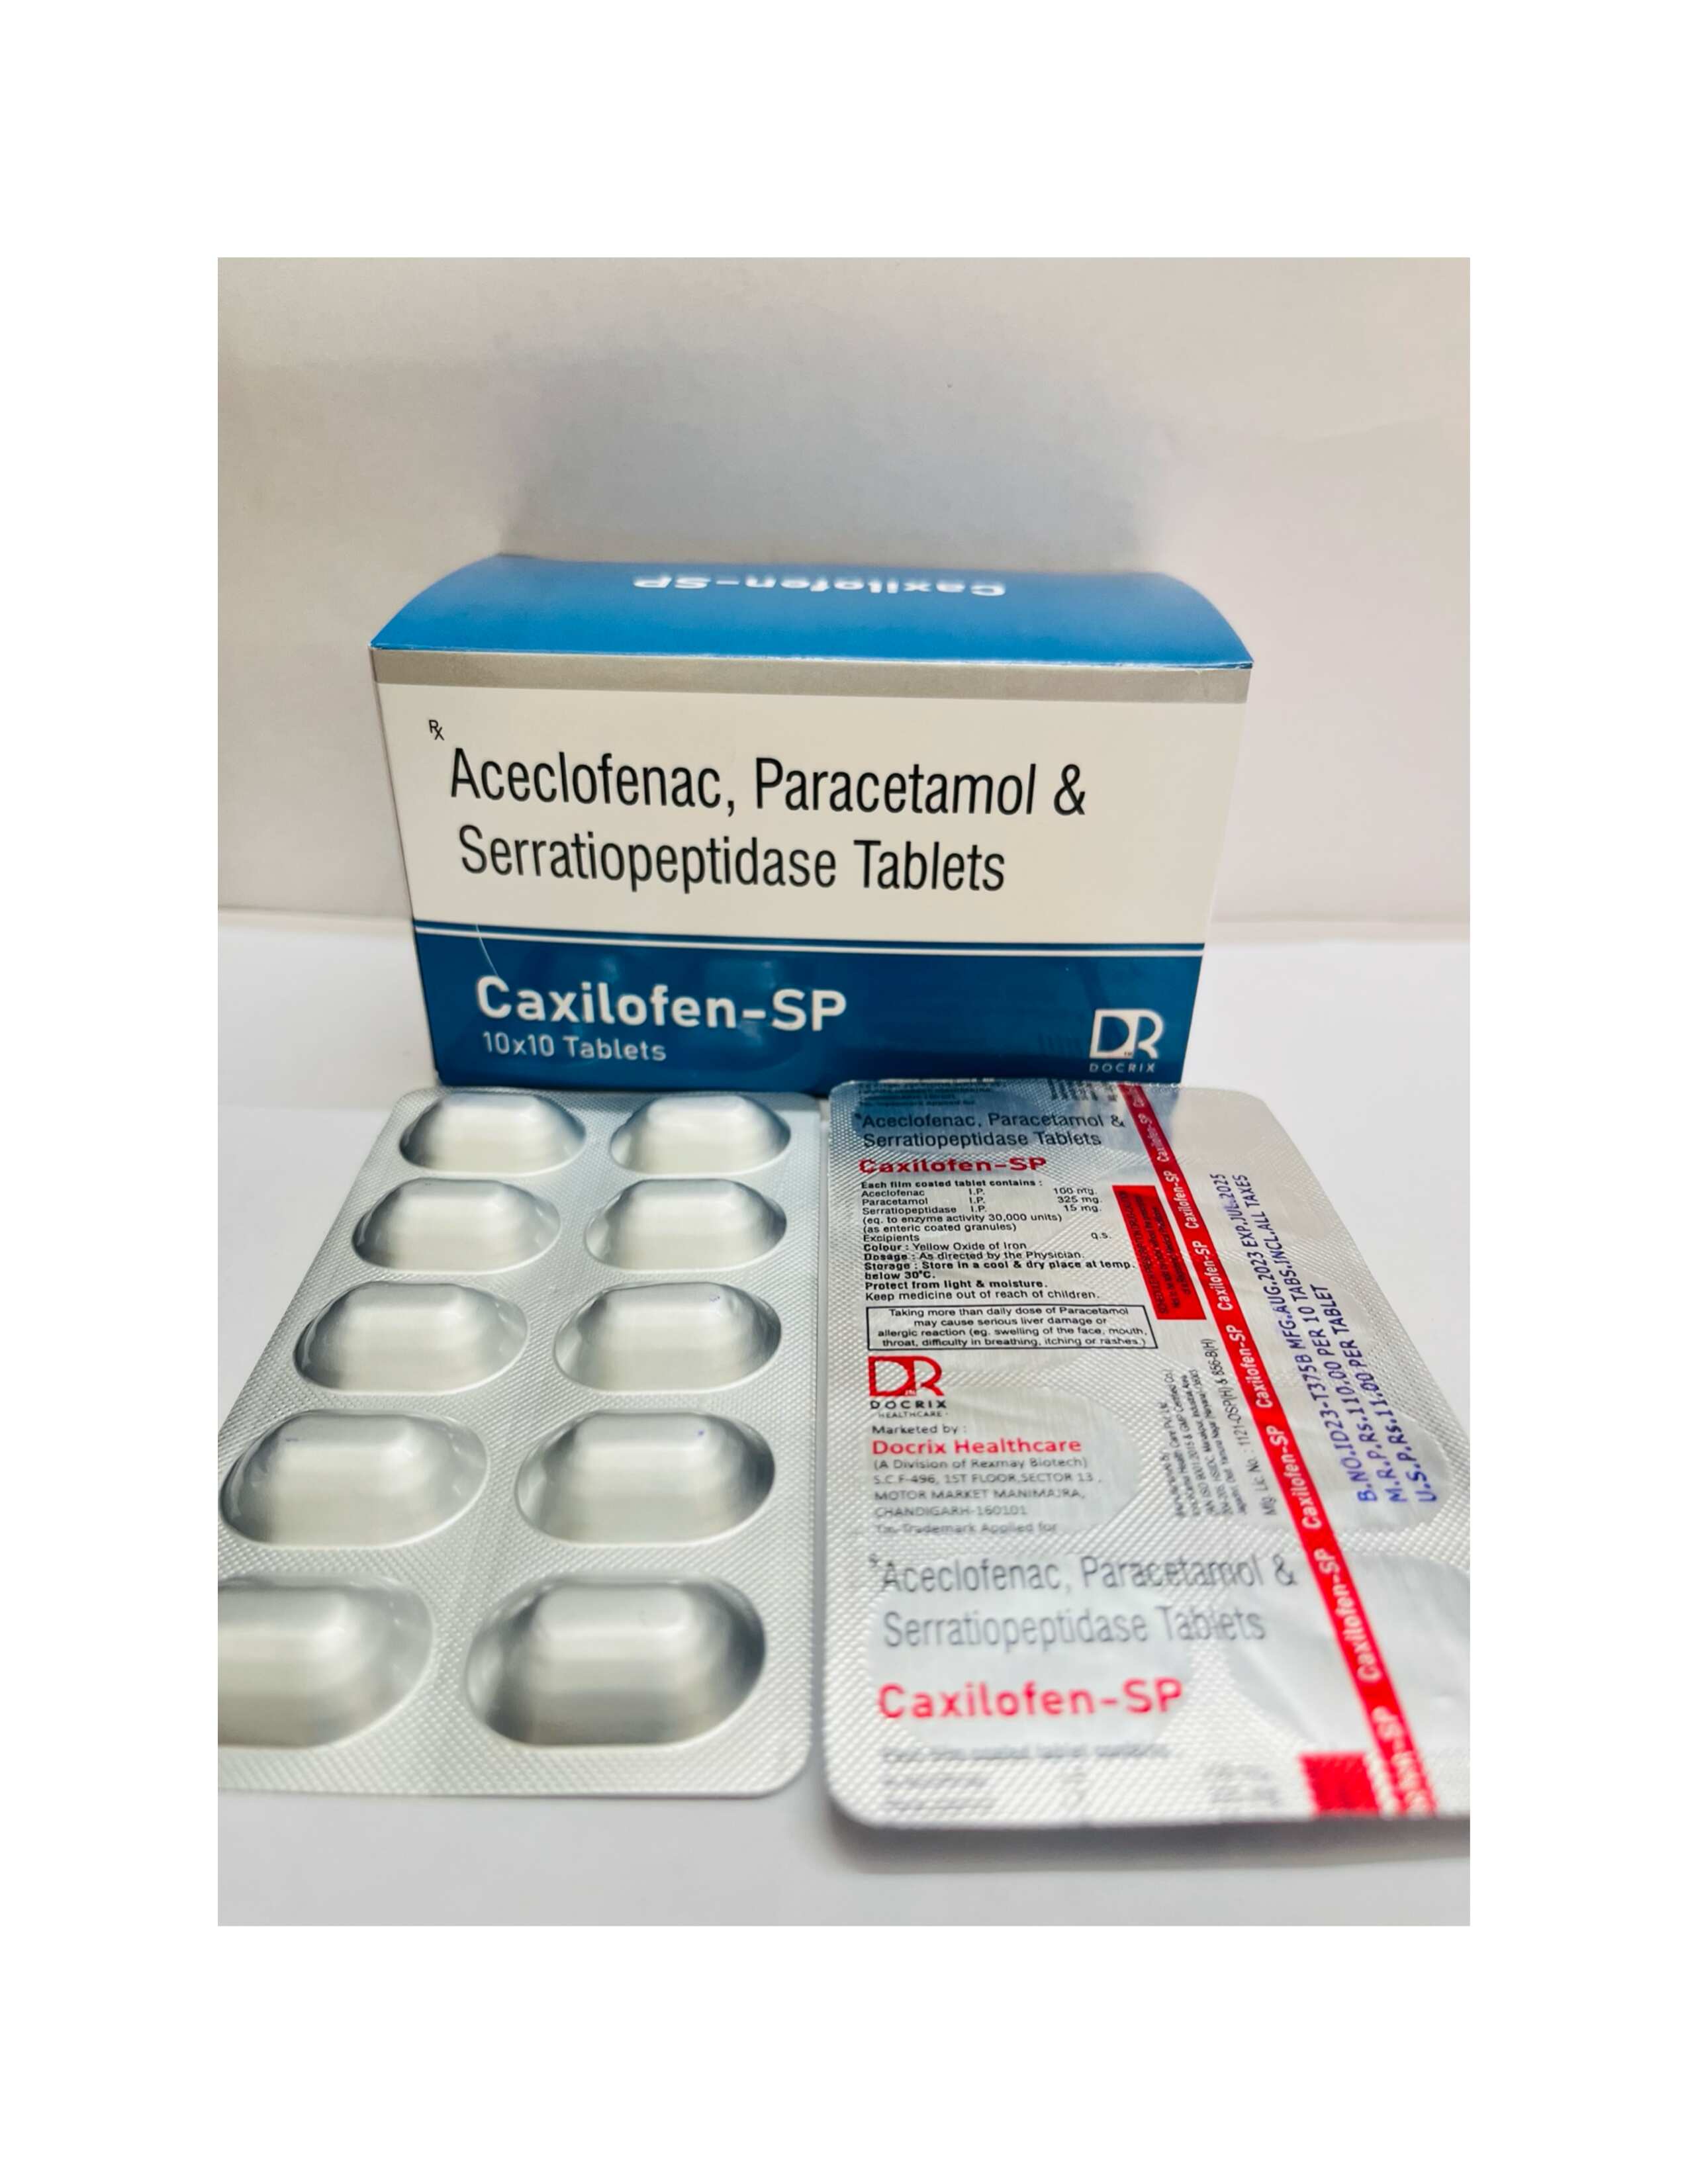 Product Name: Caxilofen SP, Compositions of Caxilofen SP are Aceclofenac , Paracetamol  & Serratiopeptidase  Tablets - Docrix Healthcare